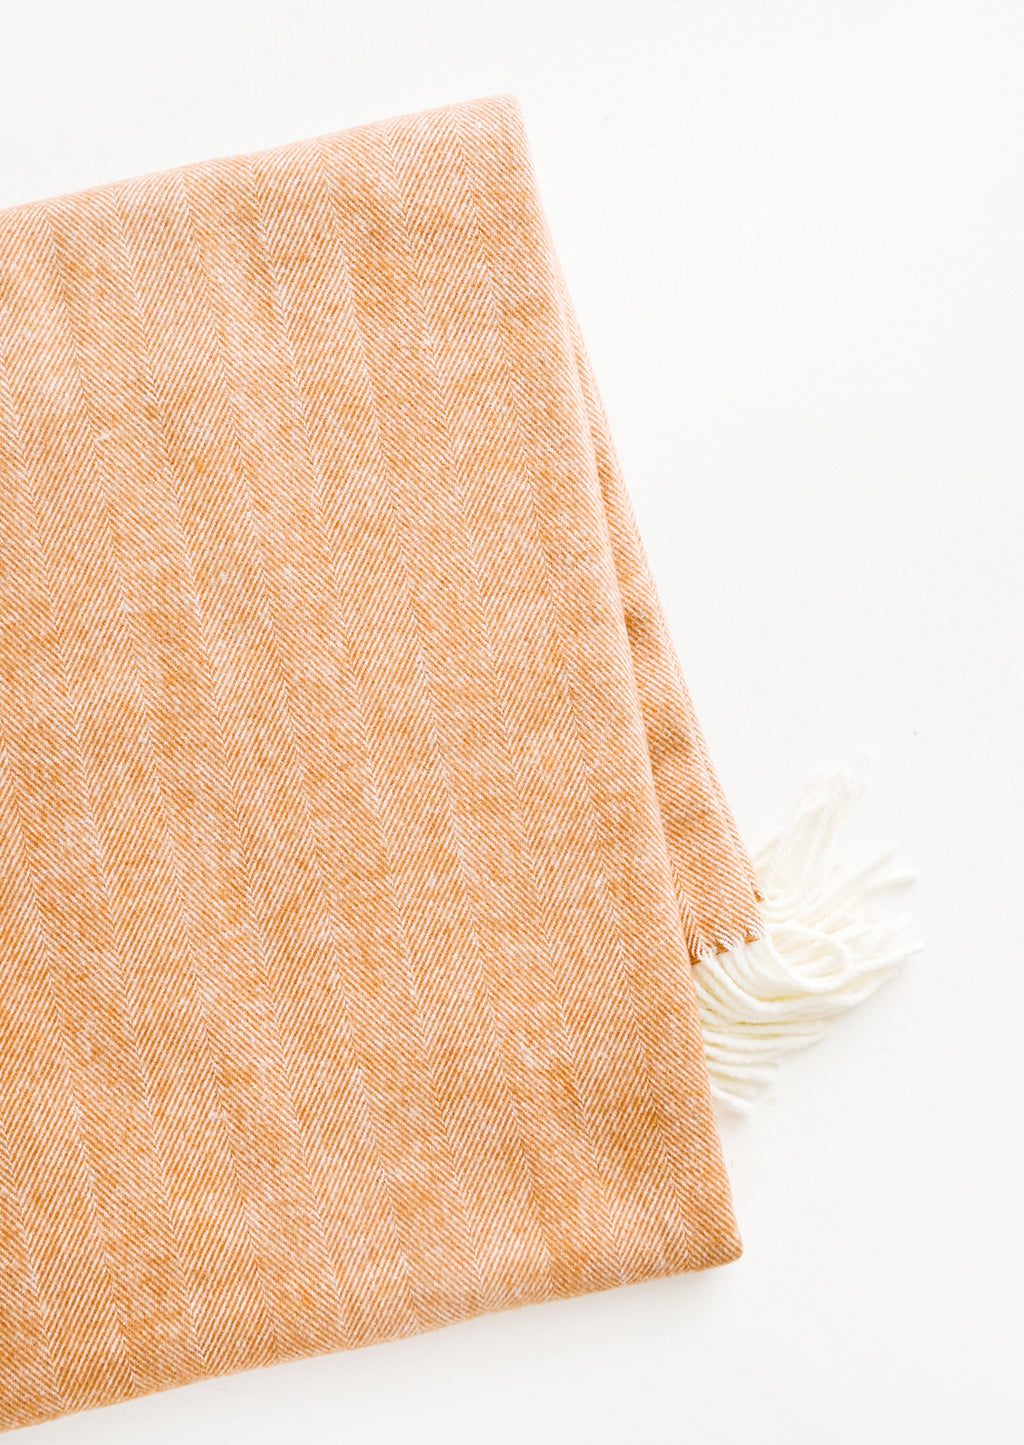 Copper: Soft blanket in copper colored herringbone weave. Ivory tassel trim at ends.